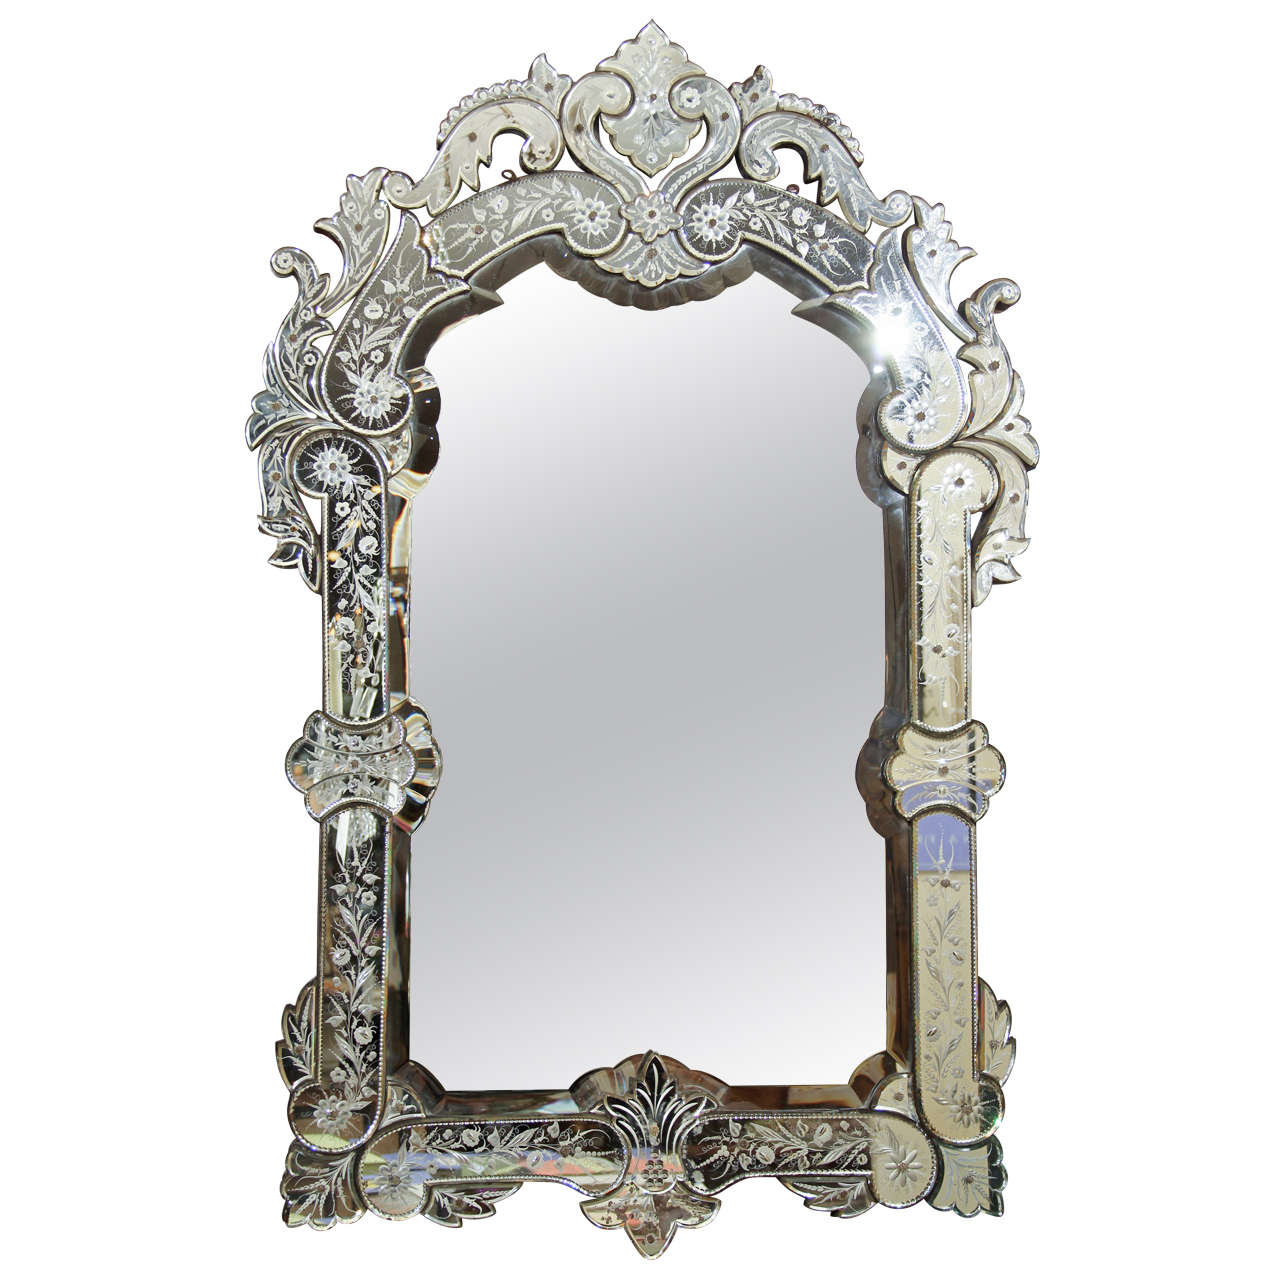 Large Venetian Mirror